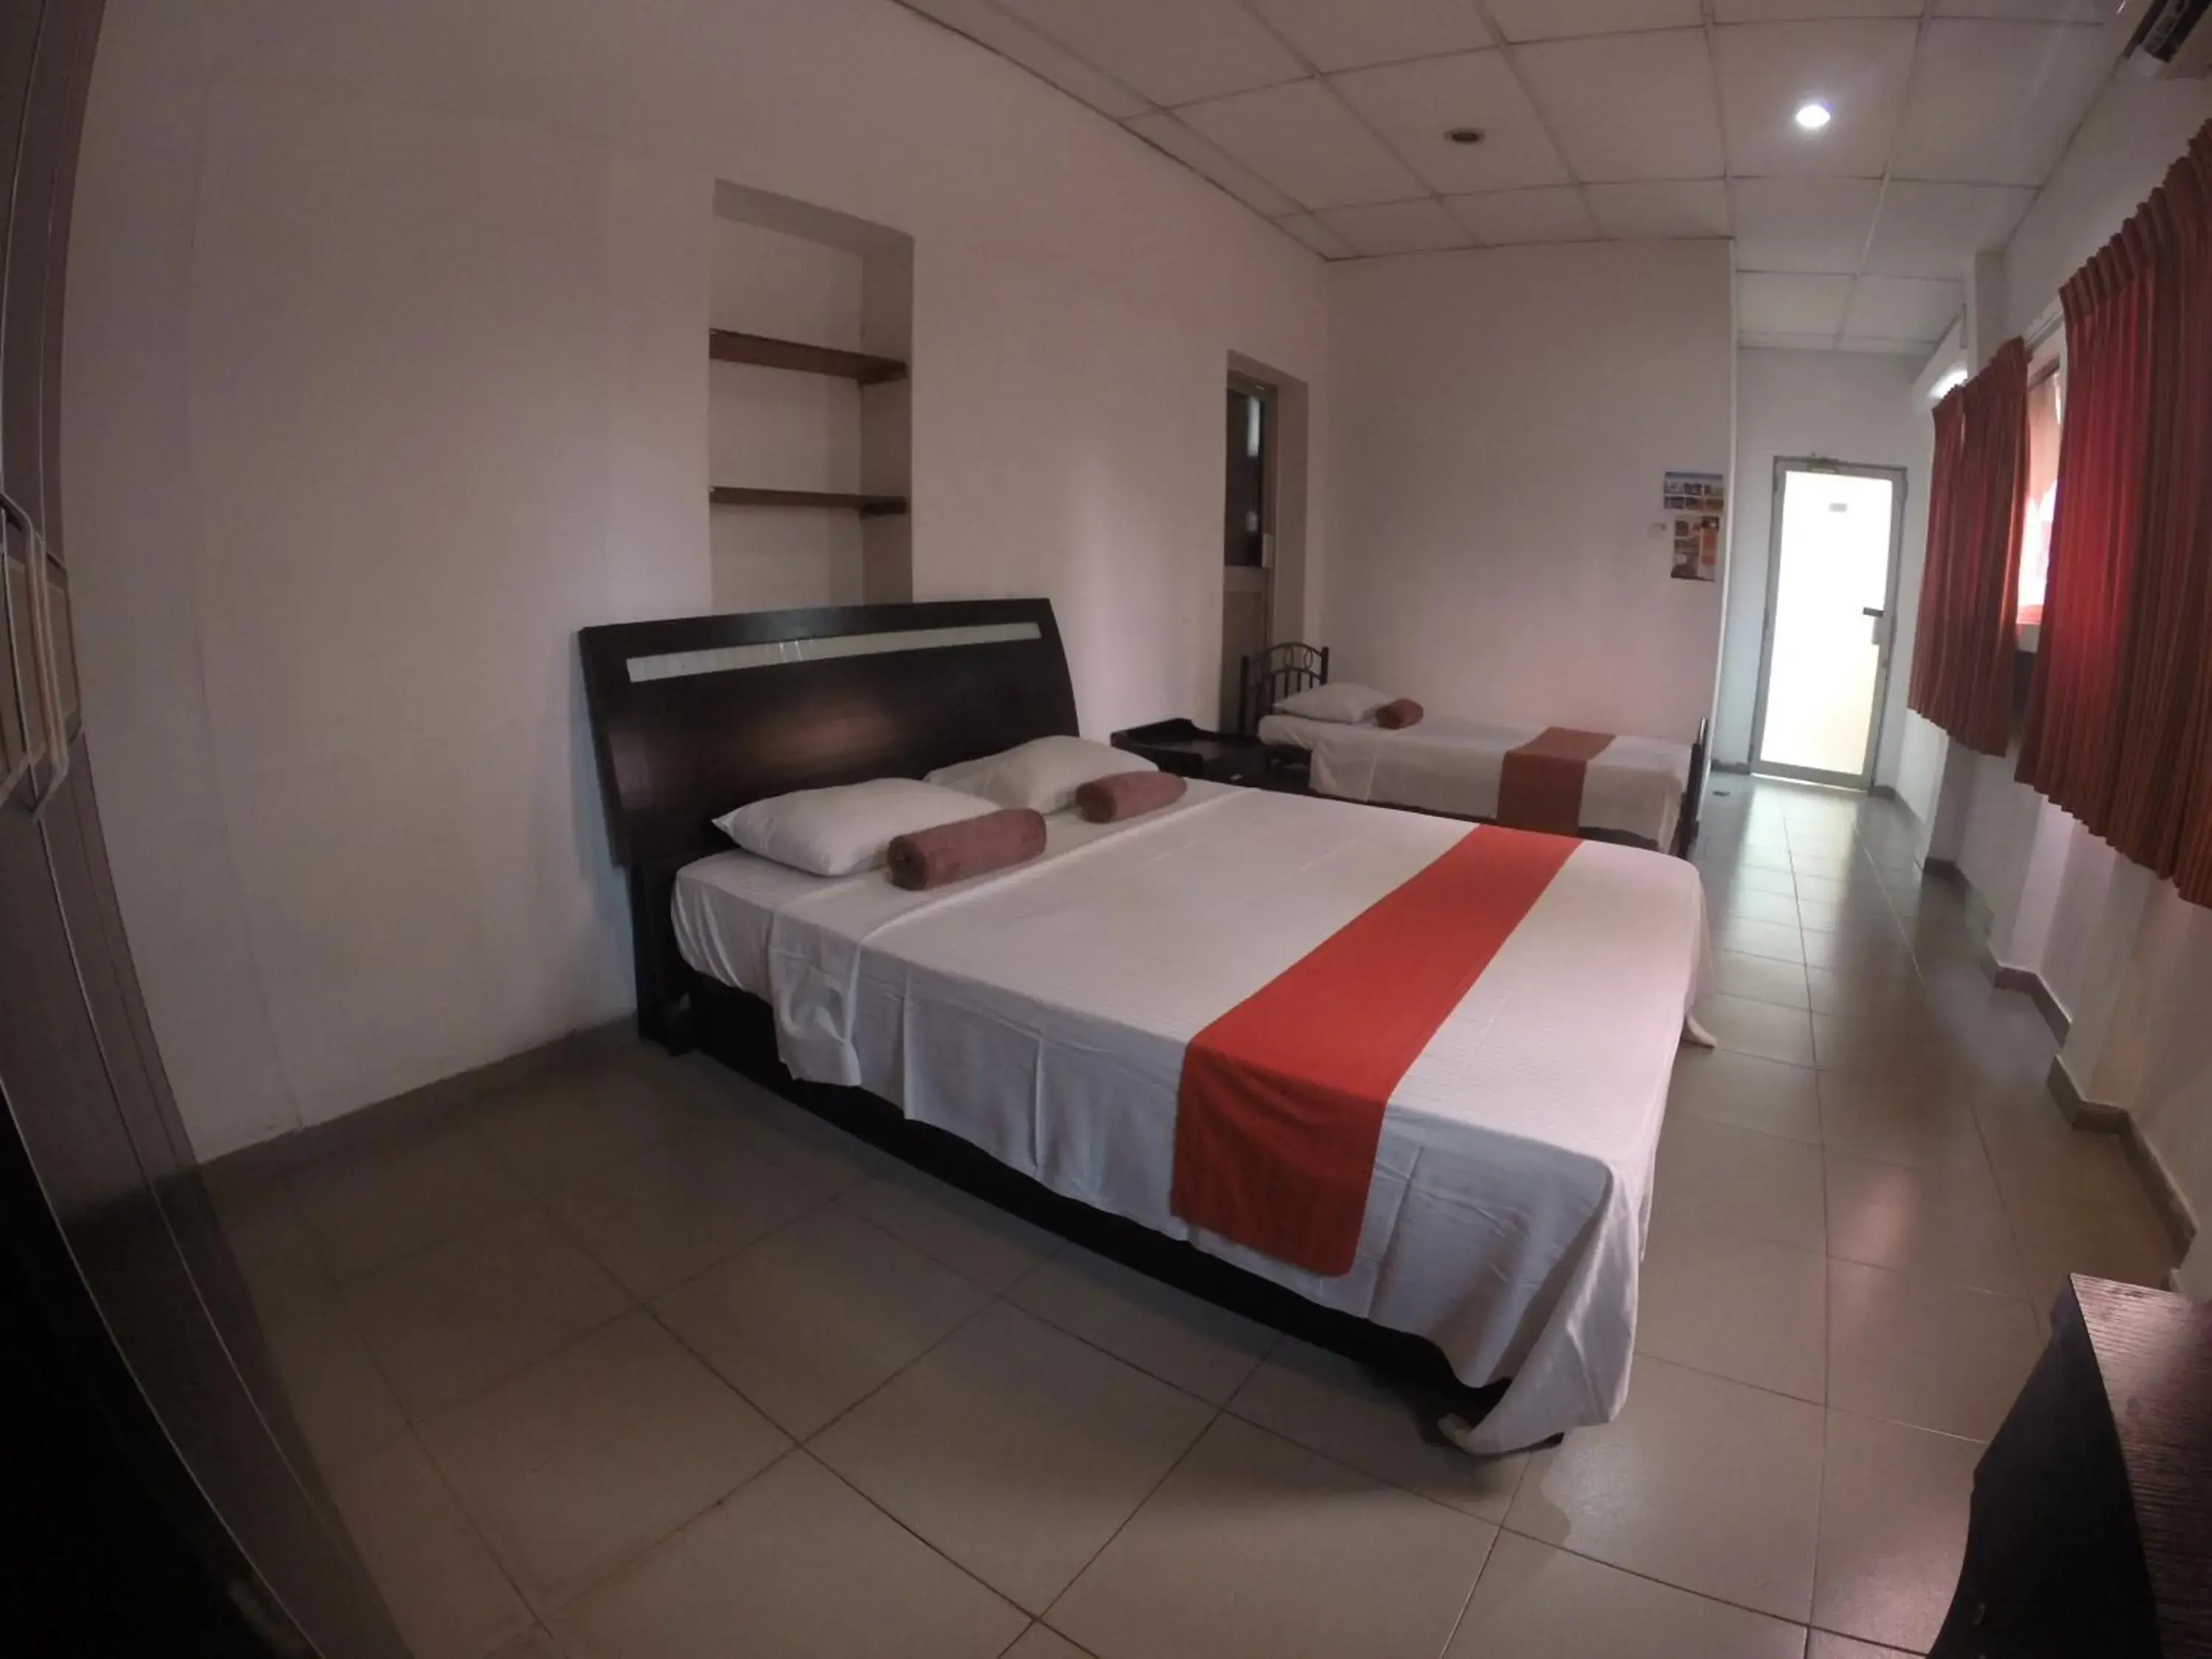 Bed, Room Photo in Backpack Lanka